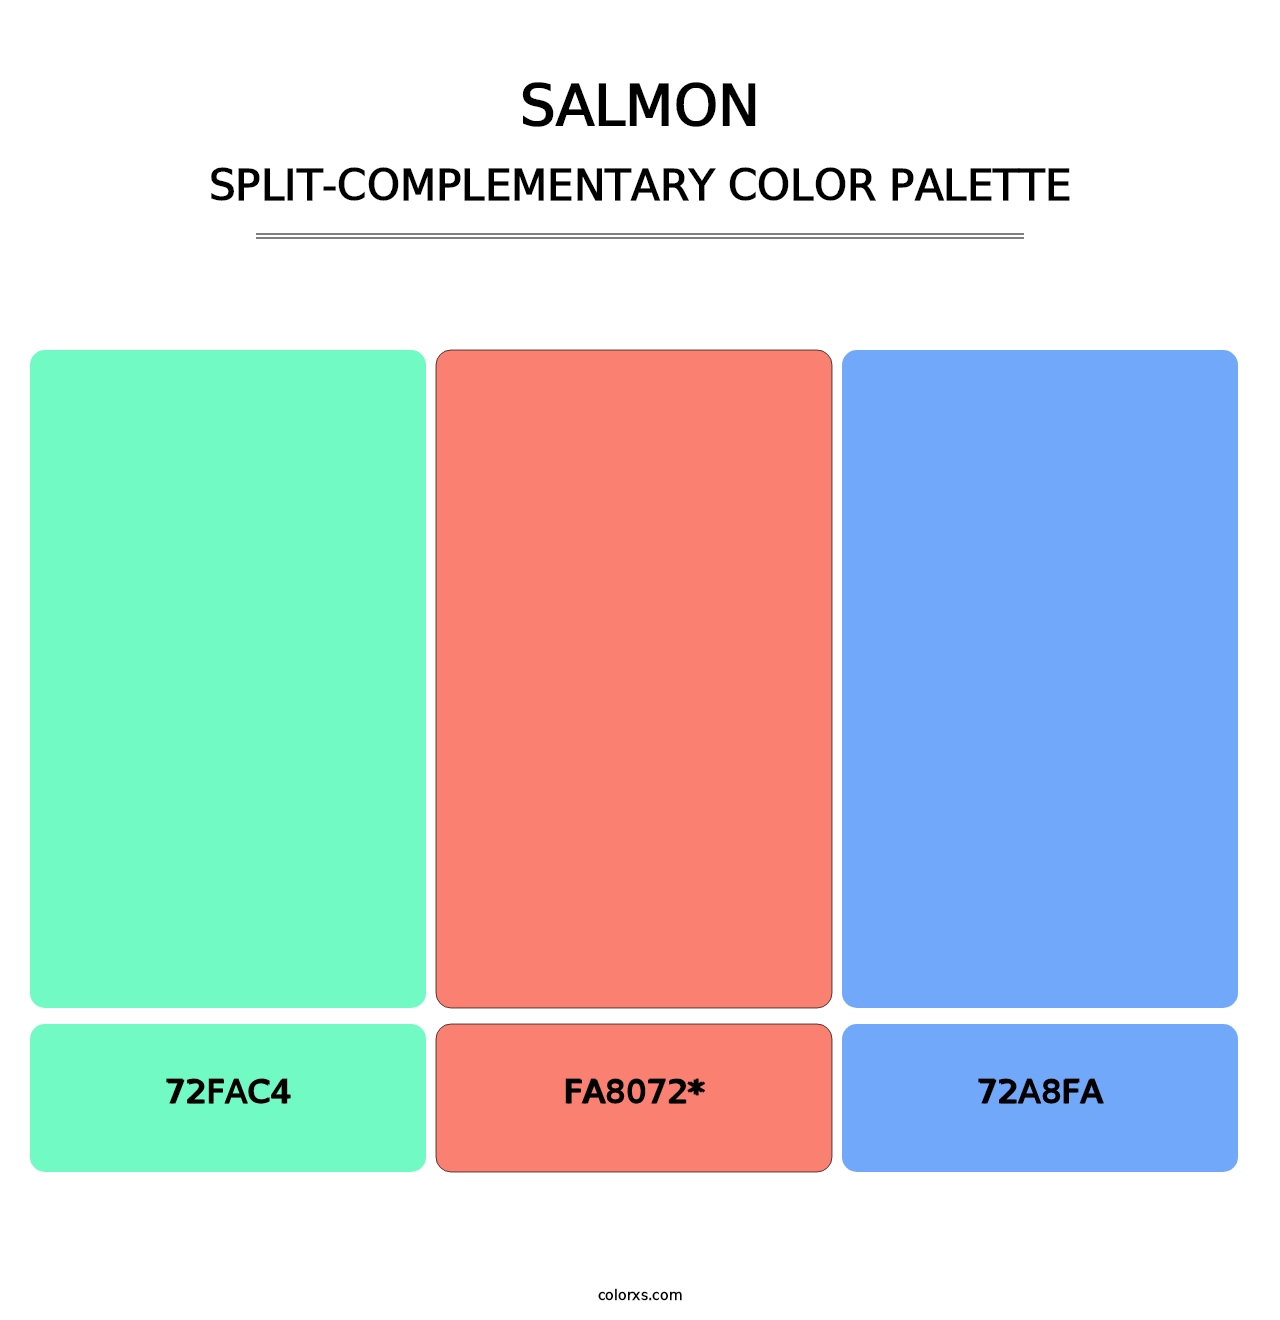 Salmon - Split-Complementary Color Palette